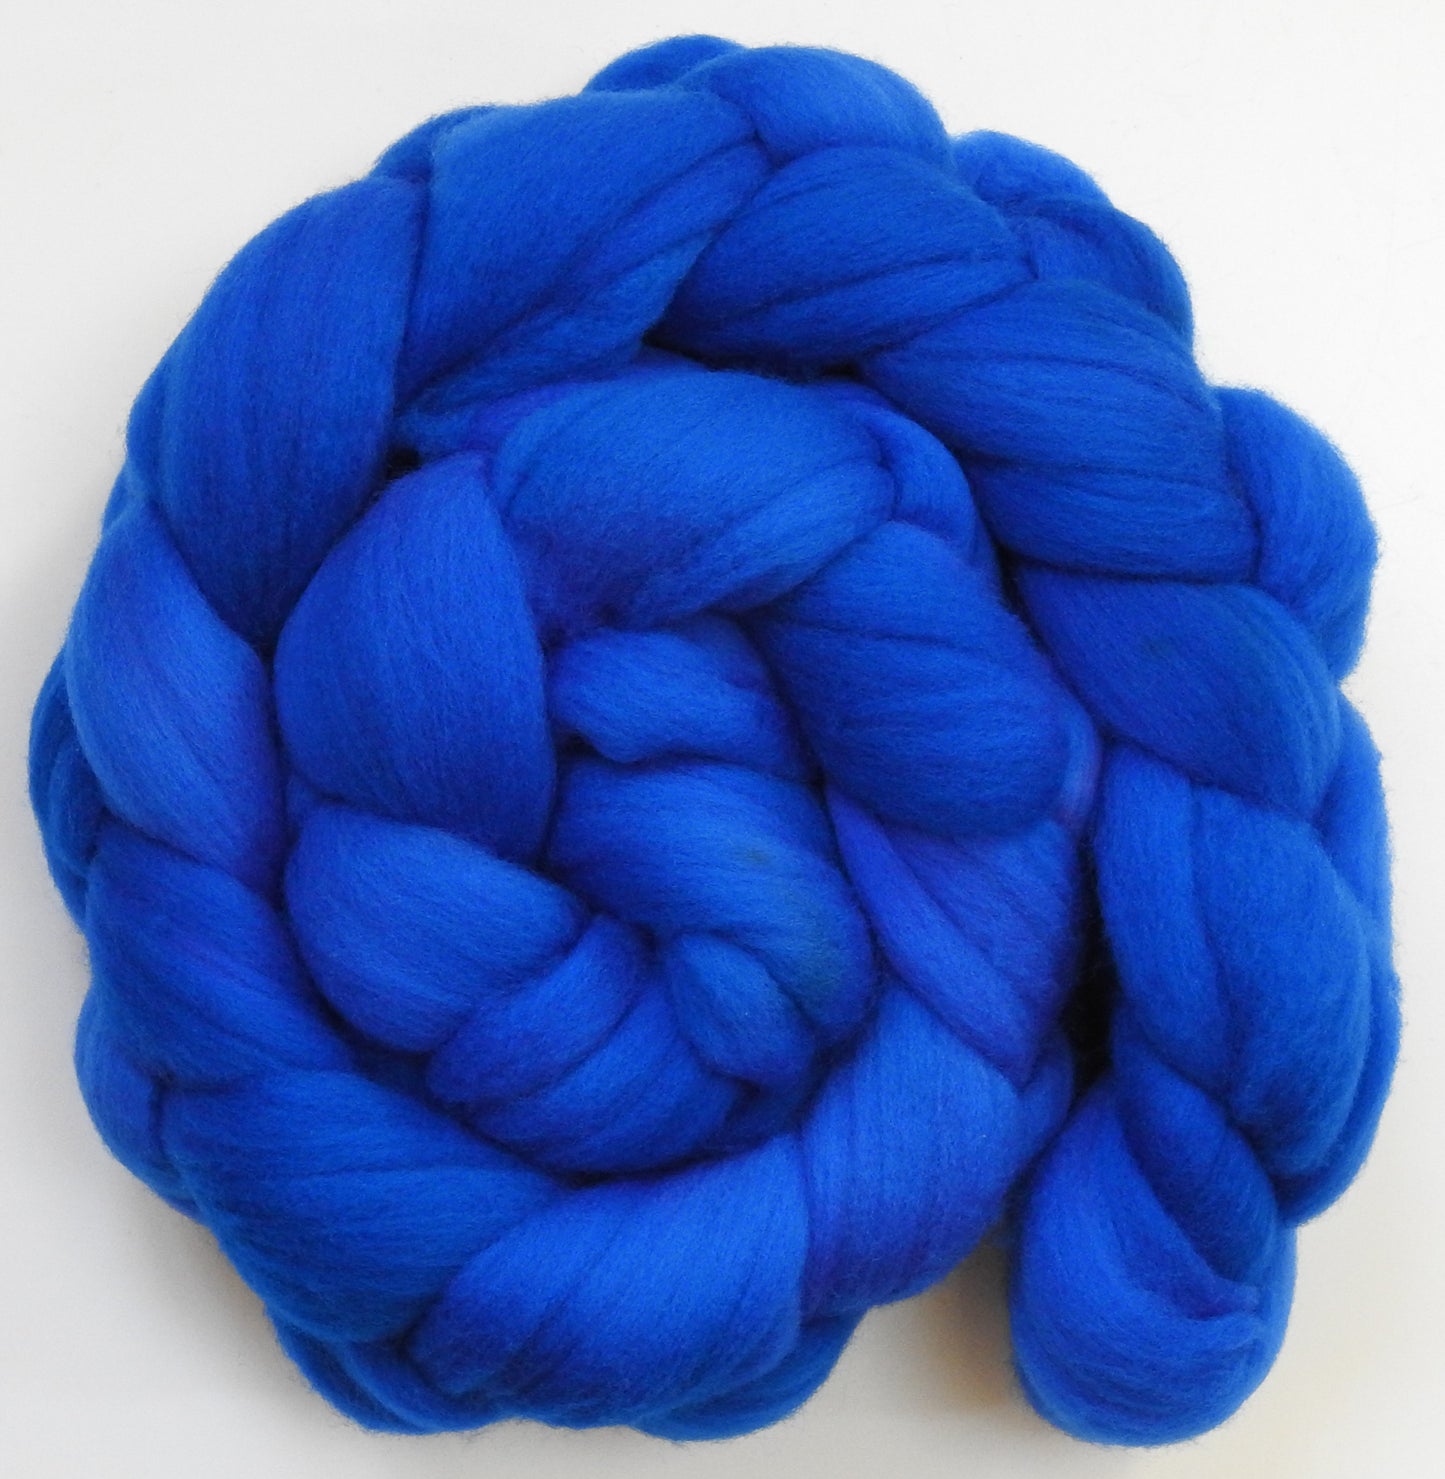 Delft Blue- (5.6 oz)Targhee- 23 mic